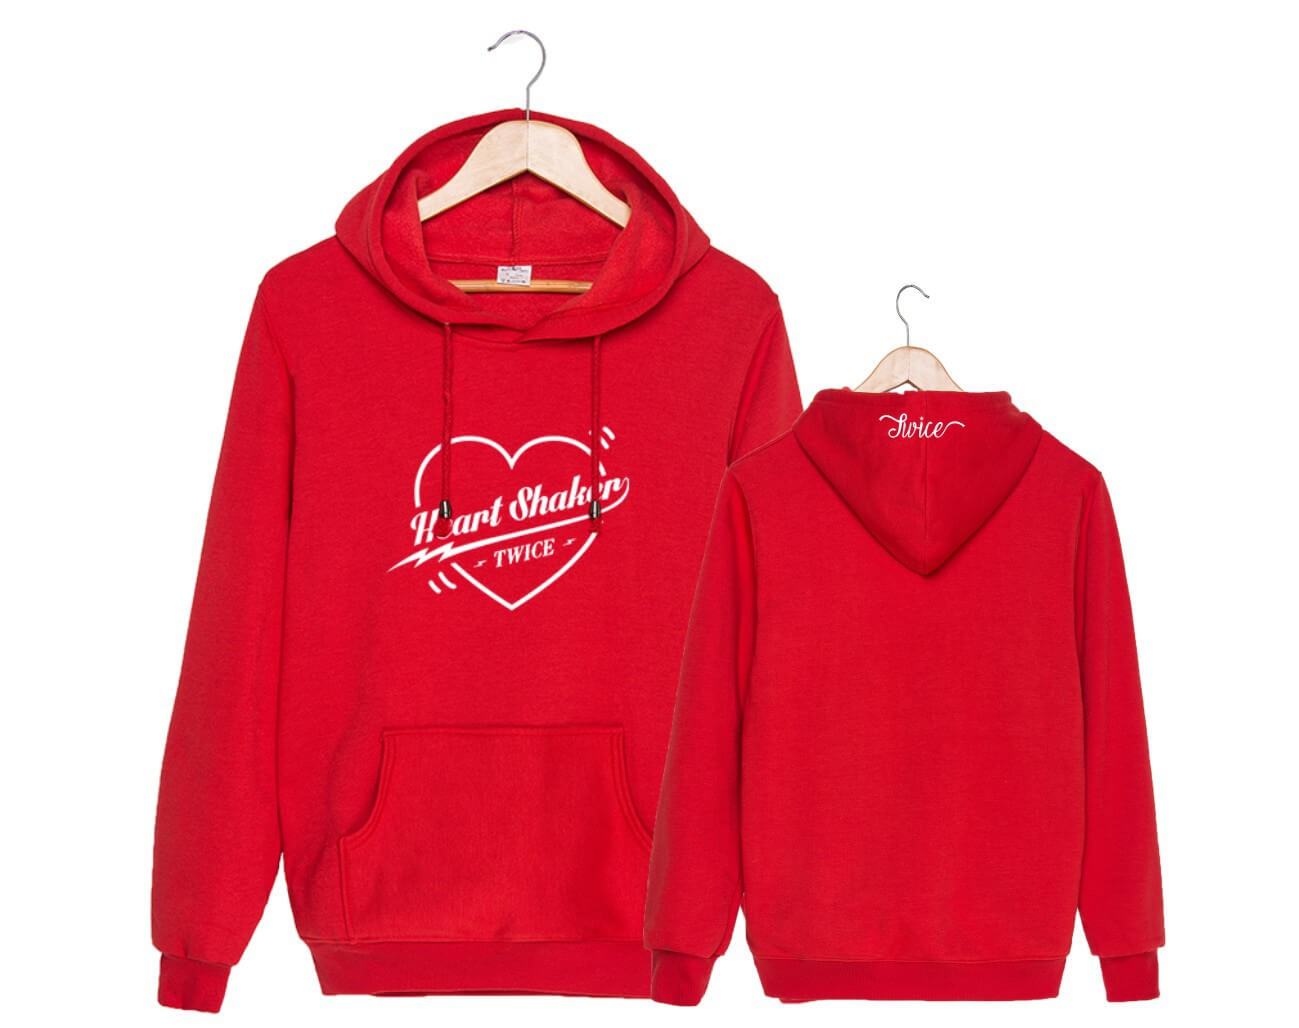 Twice Merry Happy Heart Shaker Album Print Cotton Hoodie Stray Kids Merch Shop Kpop Outfits Store